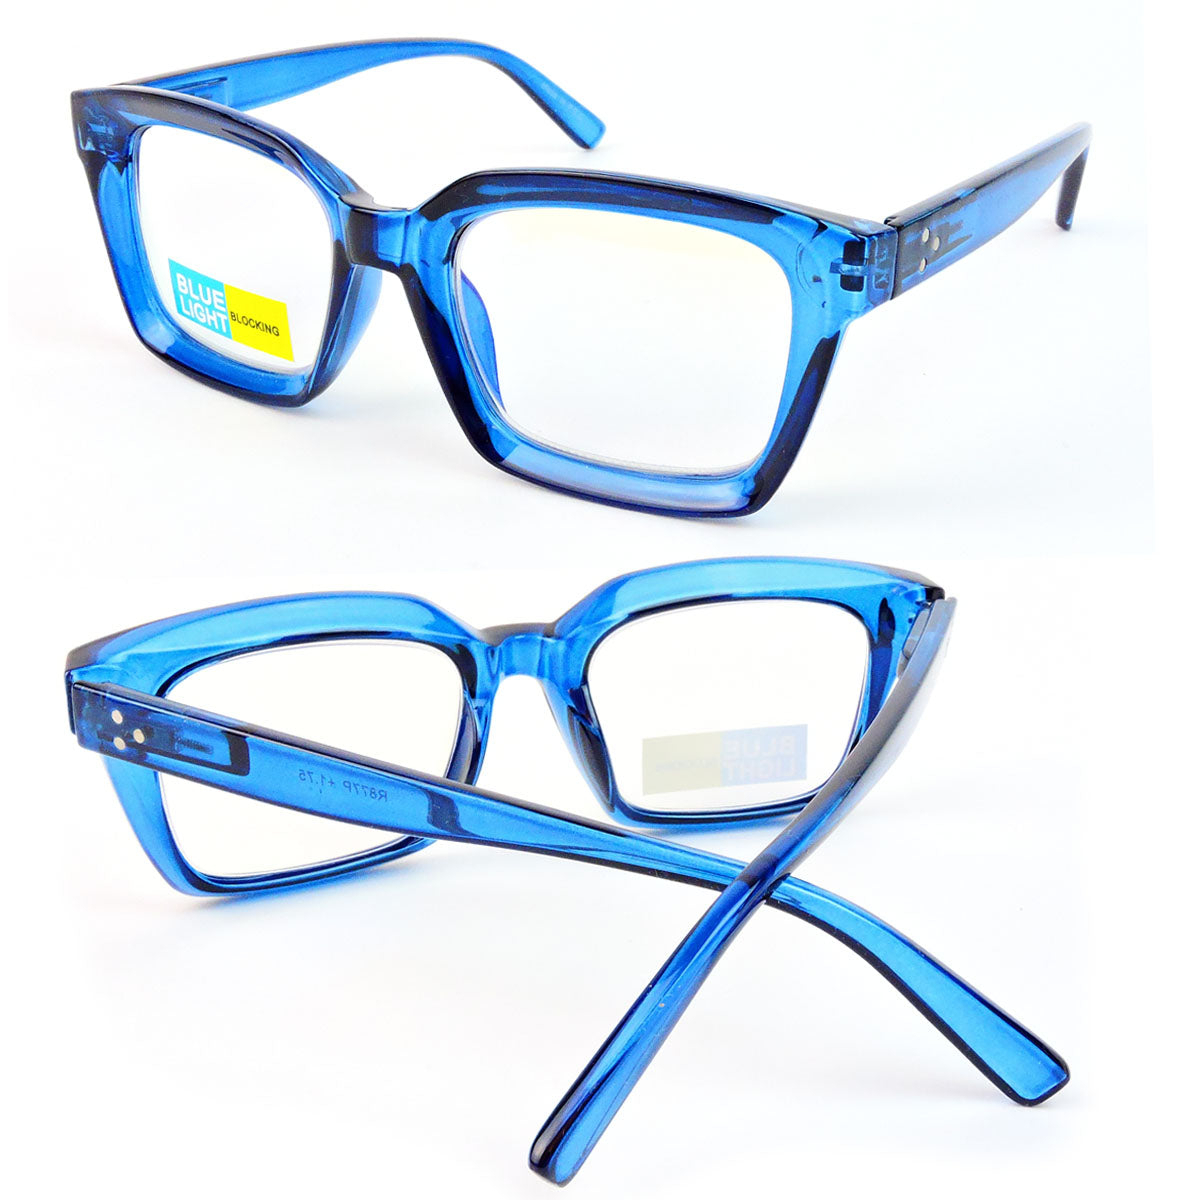 Blue Light Blocking Glasses Thick Rectangle Preppy Look - Reading Glasses - Blue, +2.00